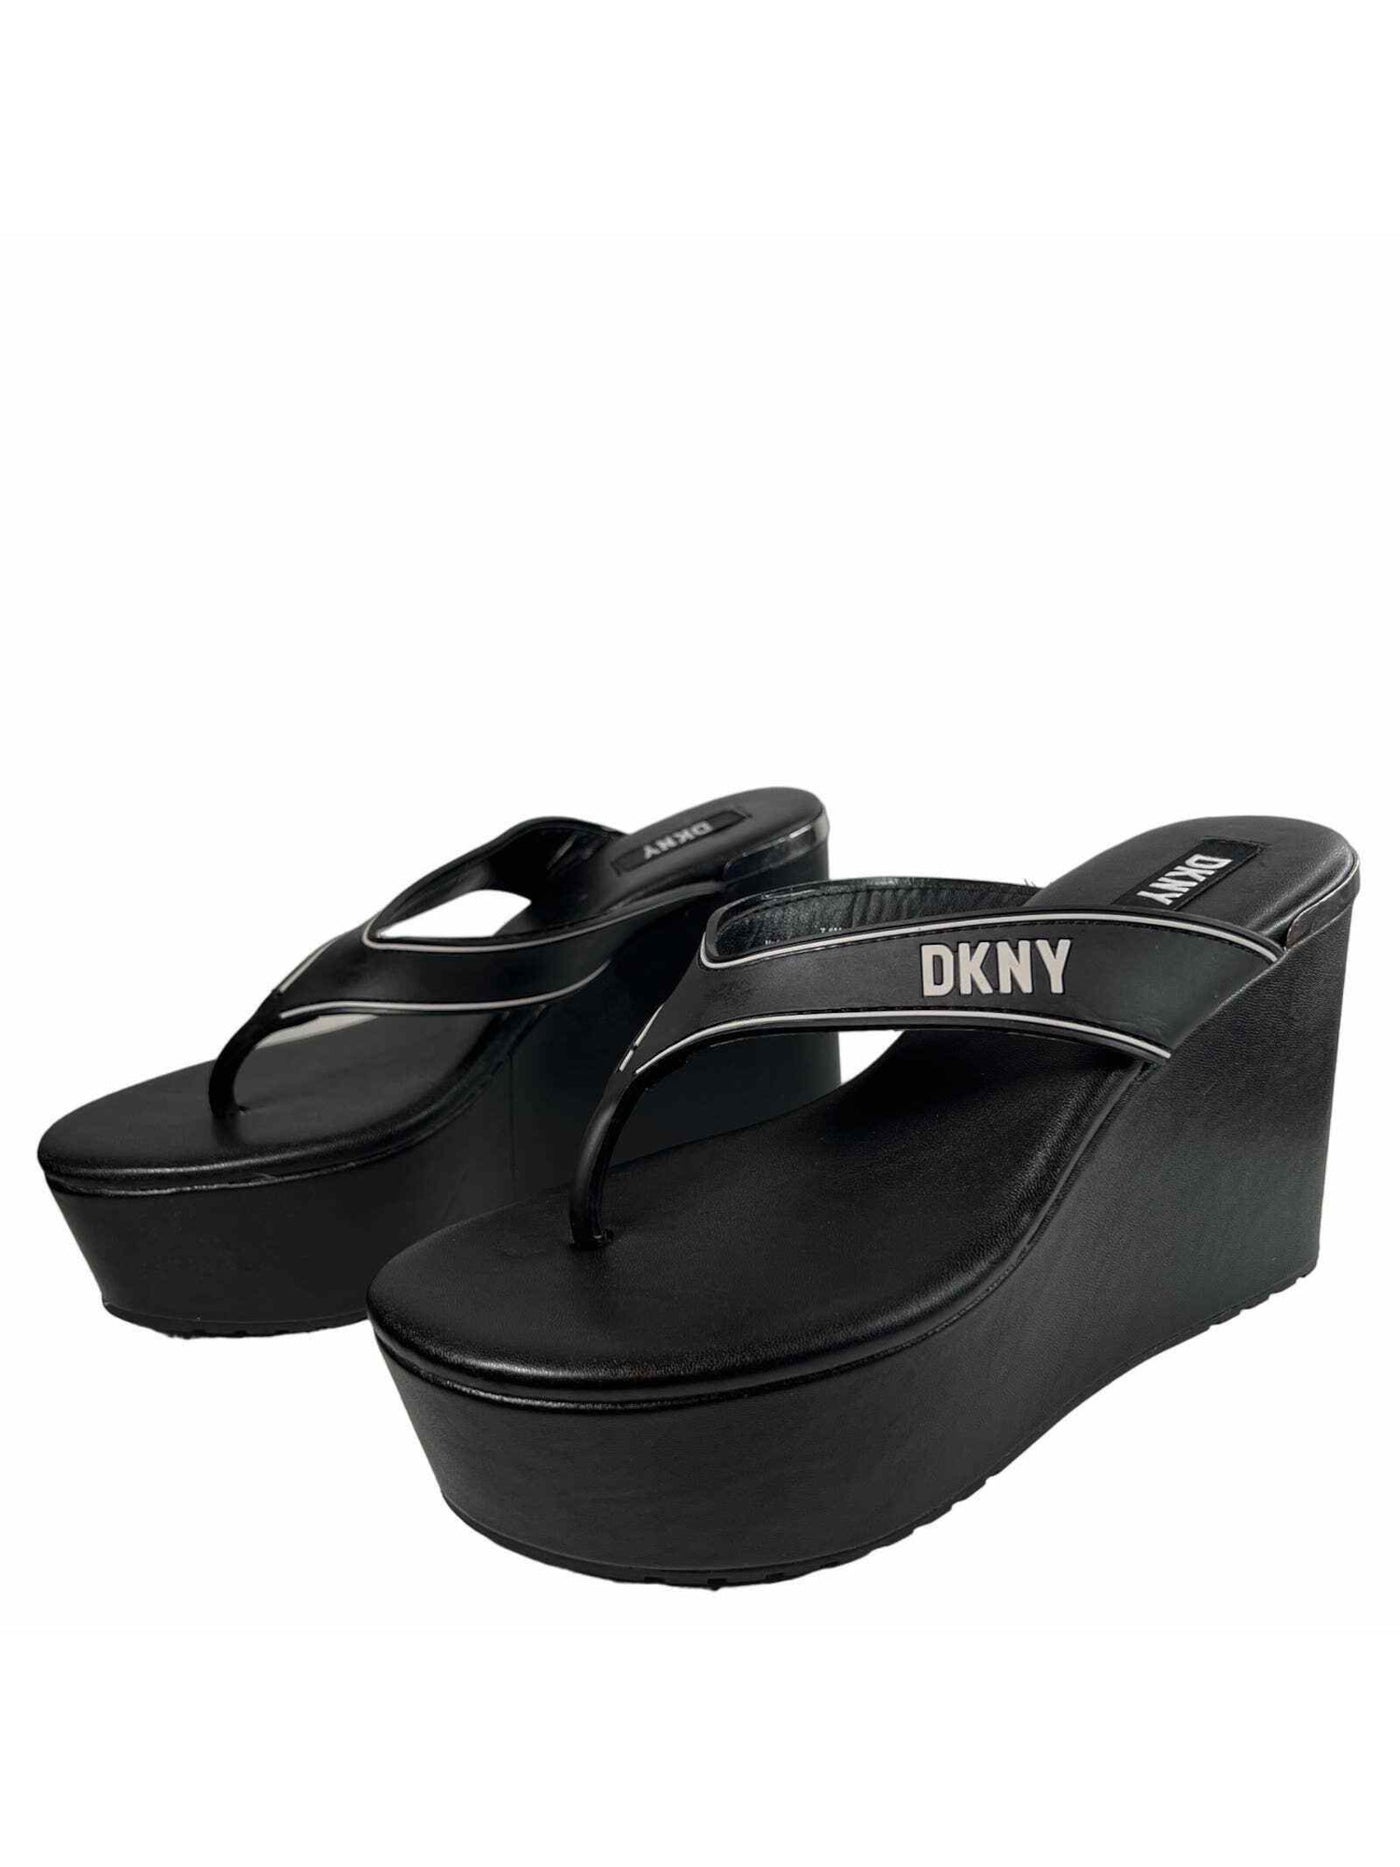 DKNY Womens Black 2" Platform Comfort Logo Trina Round Toe Wedge Slip On Thong Sandals Shoes 6 M